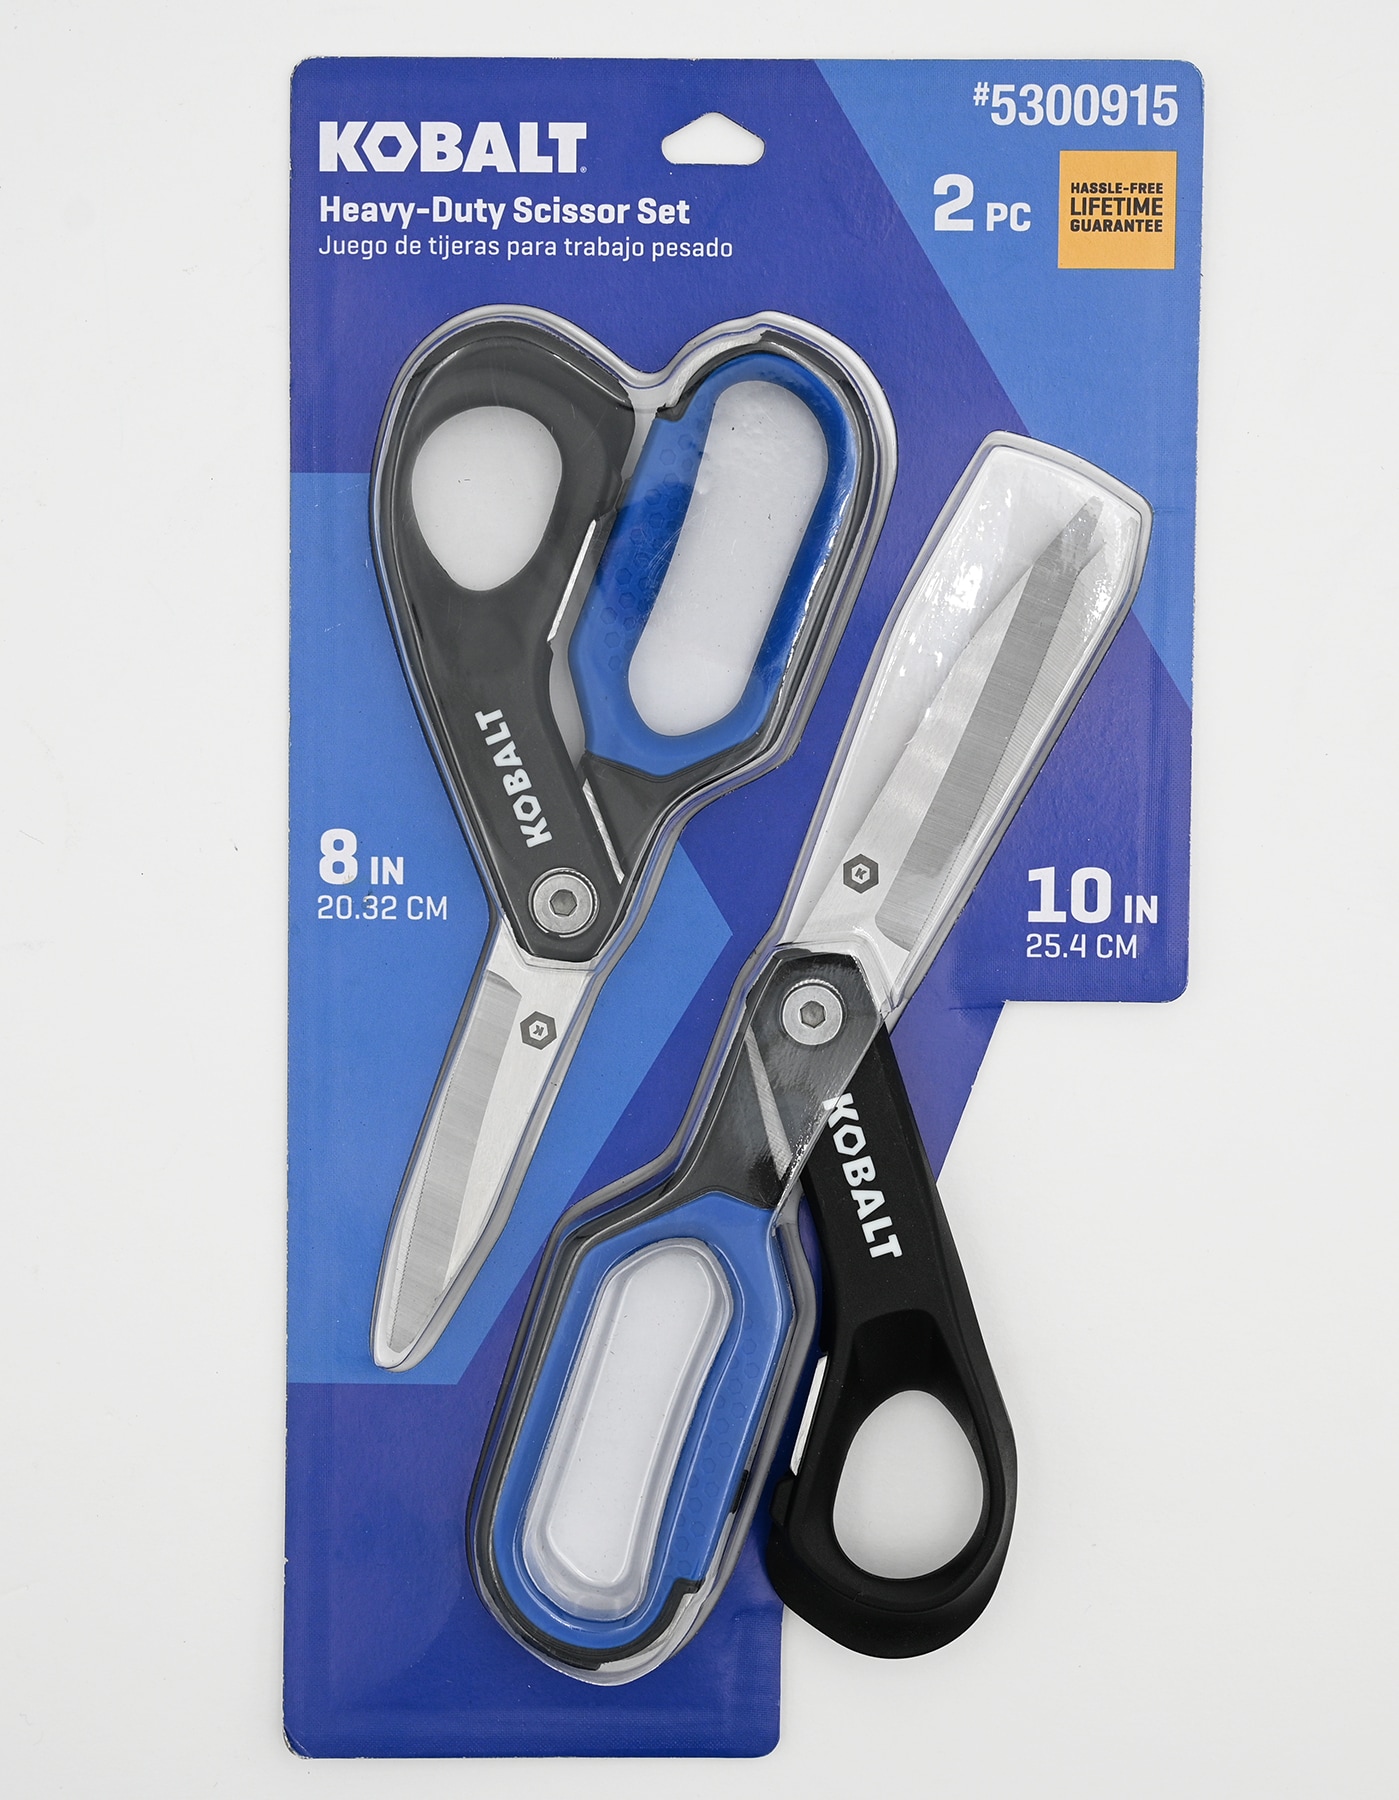 IIT 90450 5 Piece Stainless Scissors Set